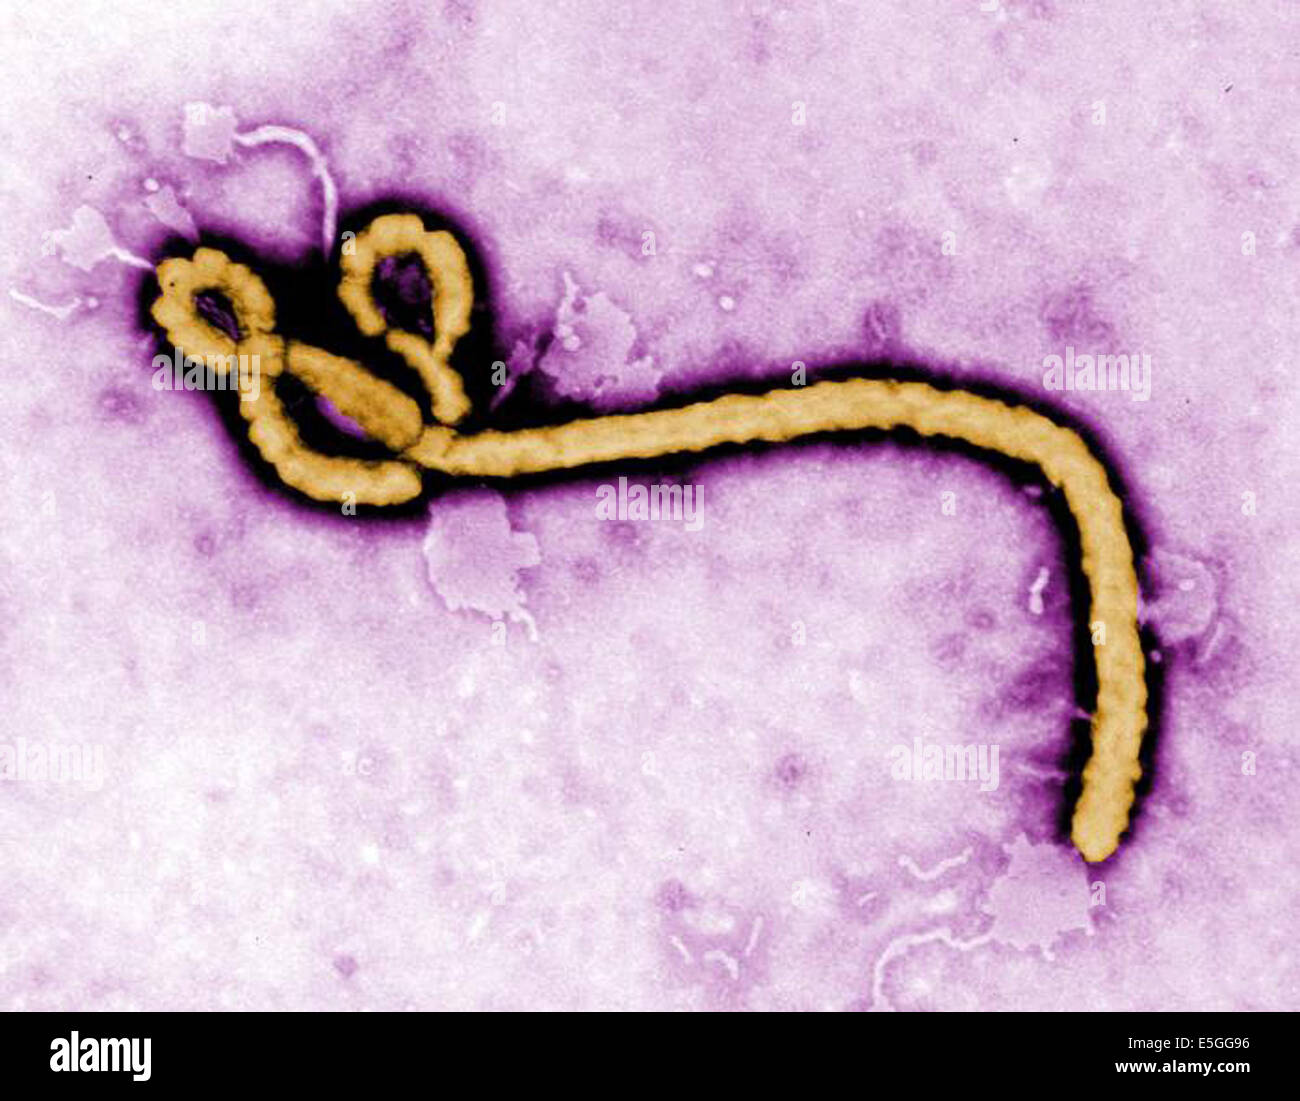 The Ebola virus. Ebola hemorrhagic fever (Ebola HF) is a severe, often-fatal disease in humans and nonhuman primates. Stock Photo